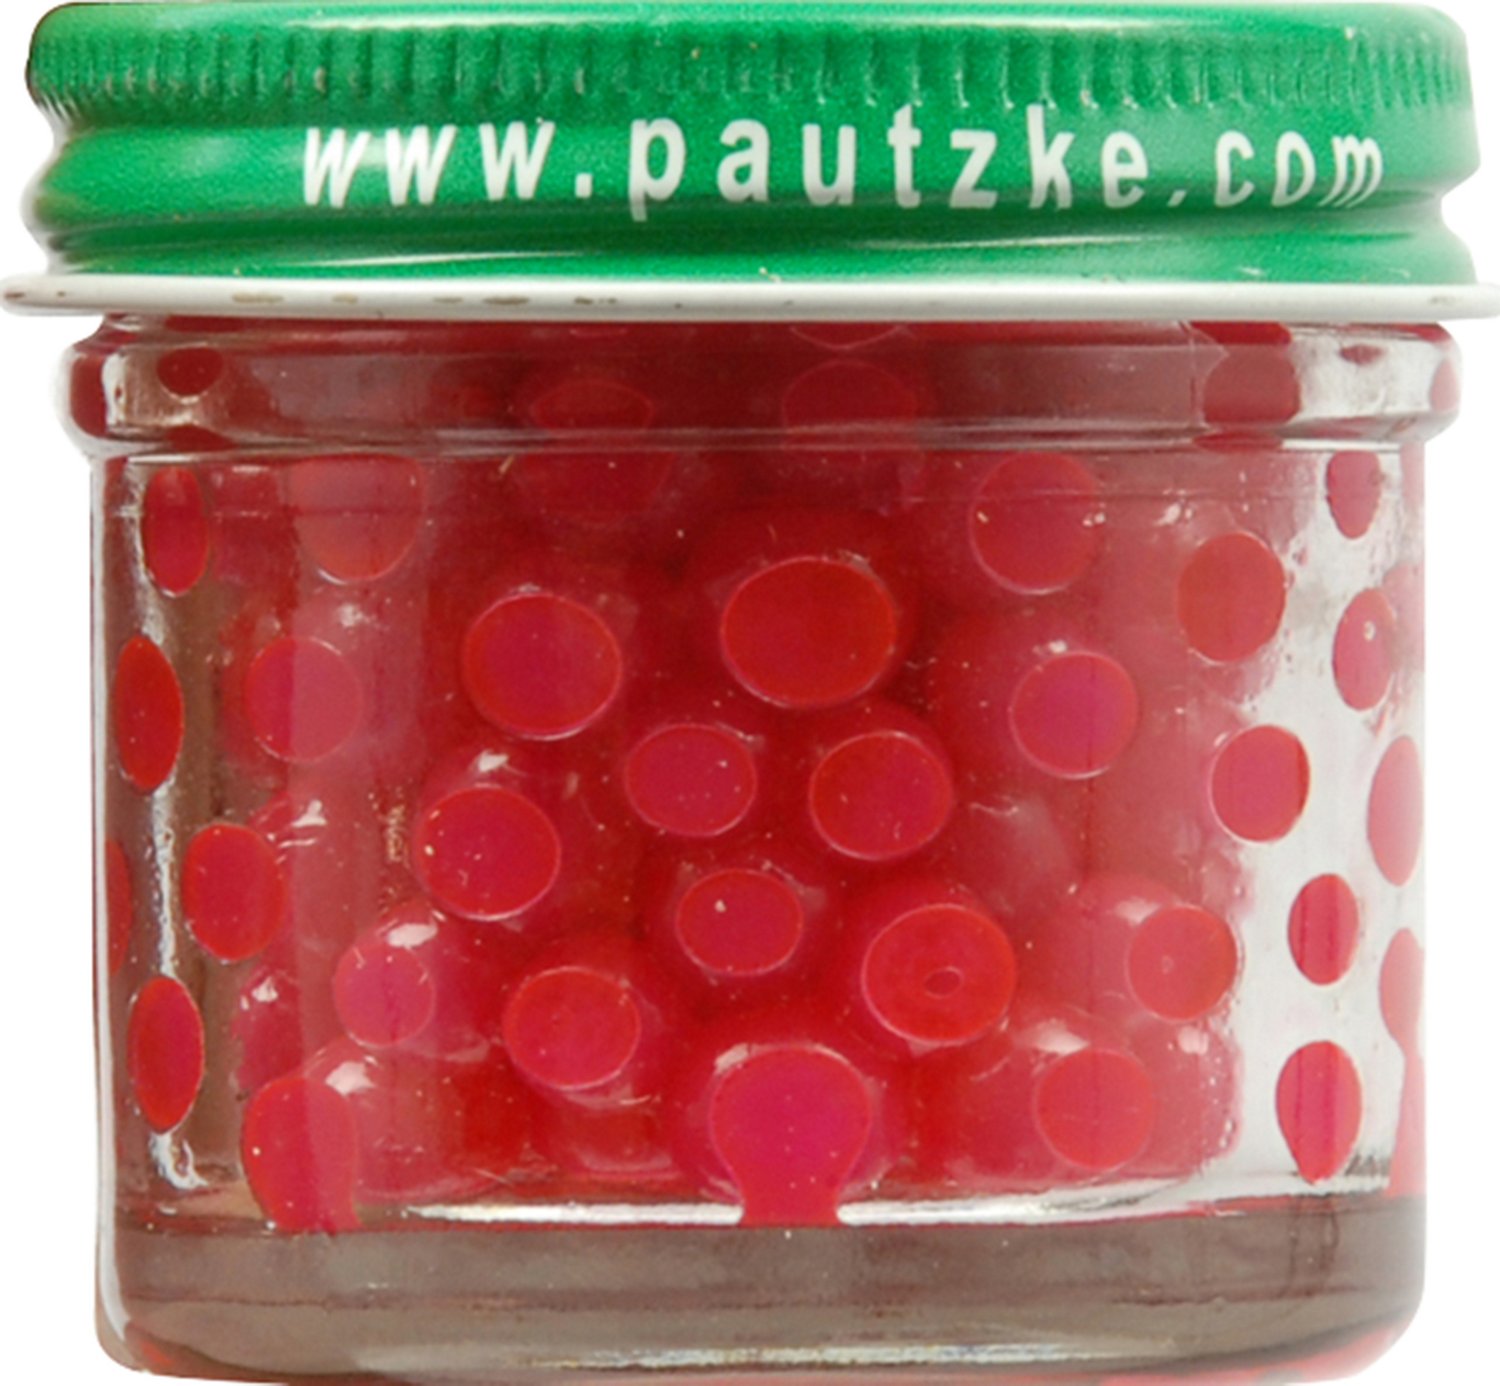 Pautzke Bait Co. Balls O'Fire Green Label 1 oz. Salmon Eggs